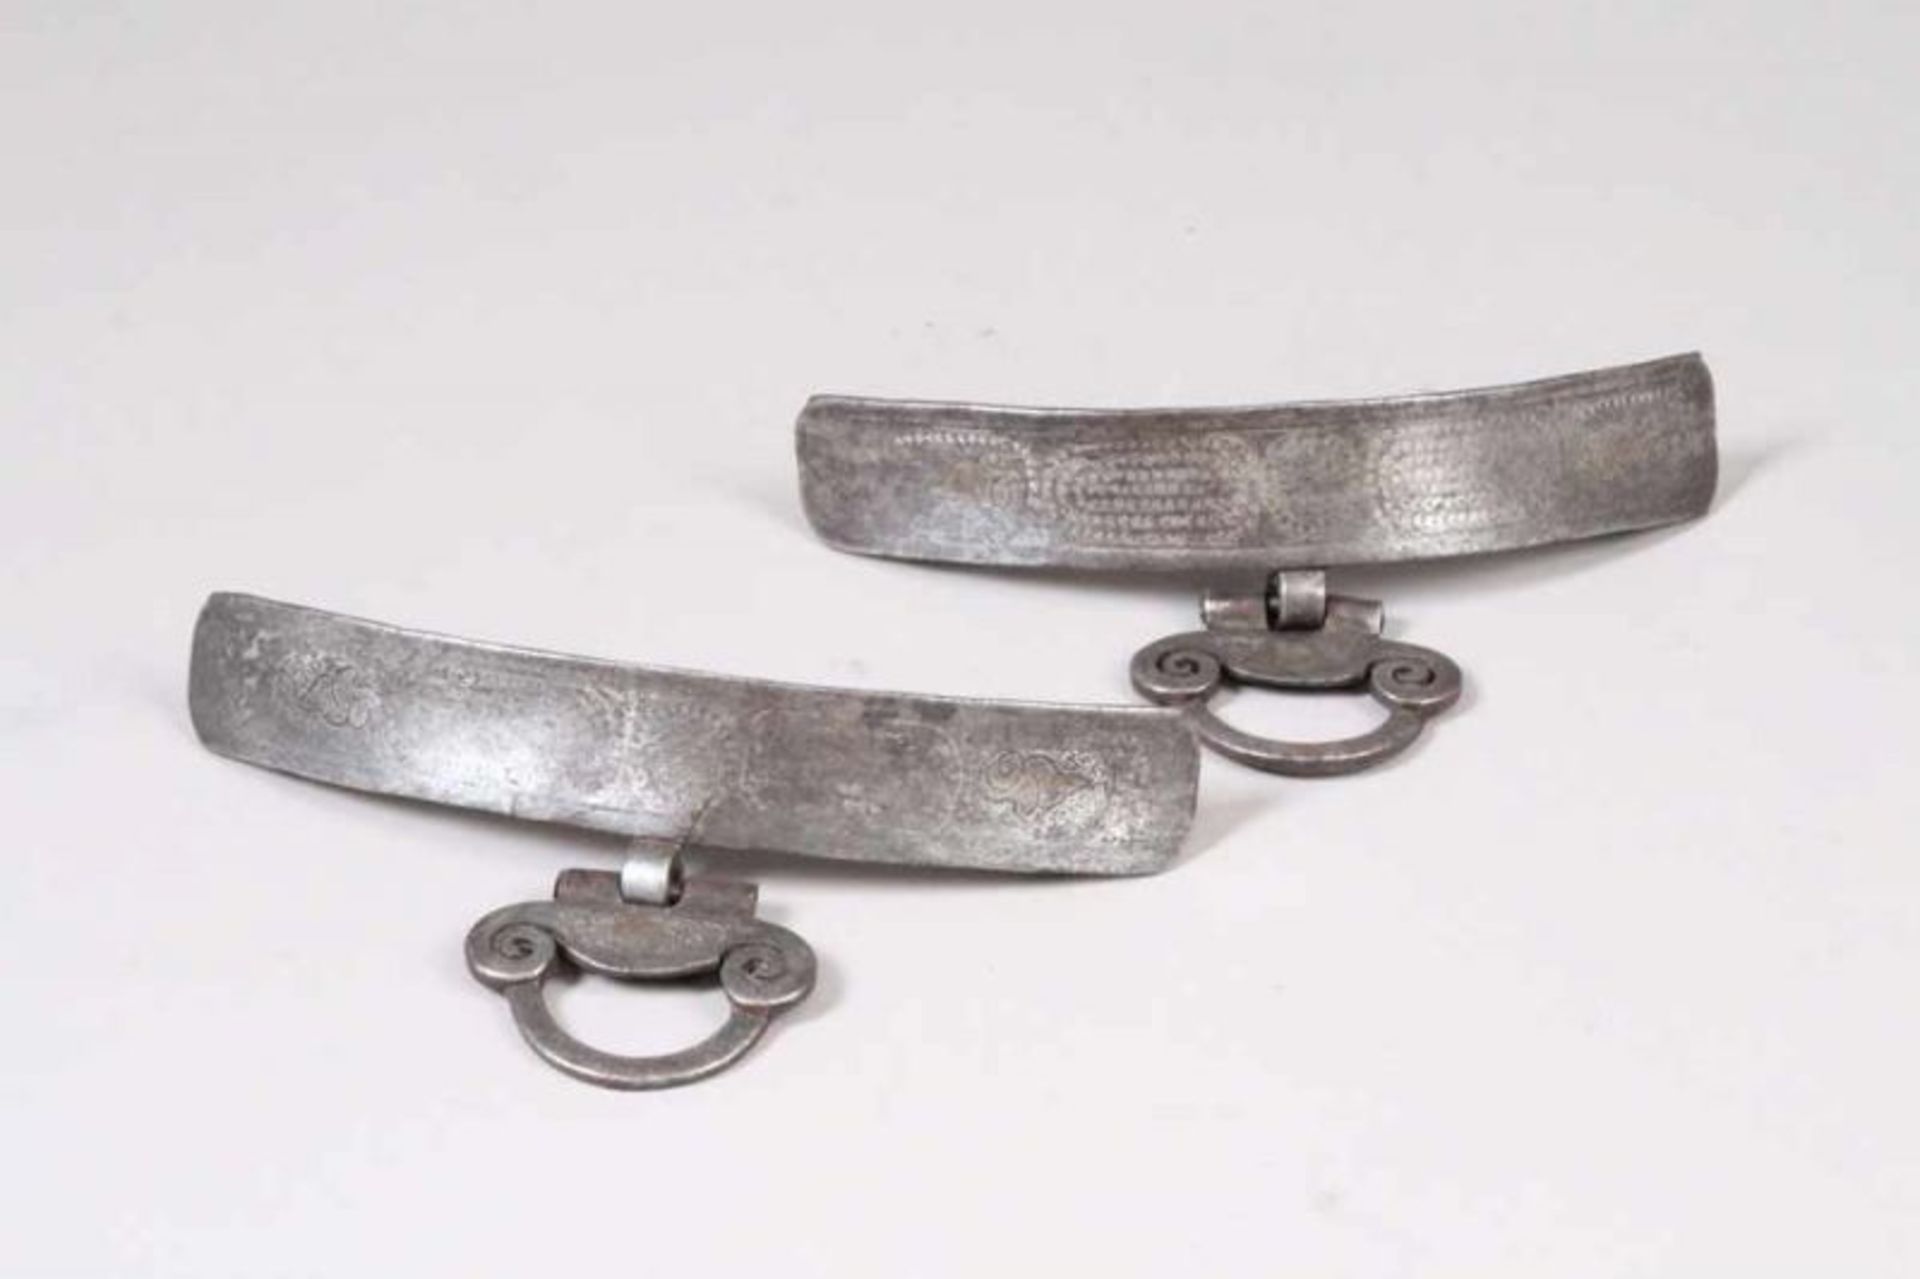 Hundehalsband.17./18. Jh. Eisen, graviert. L: 33,5 cm. 20.00 % buyer's premium on the hammer price